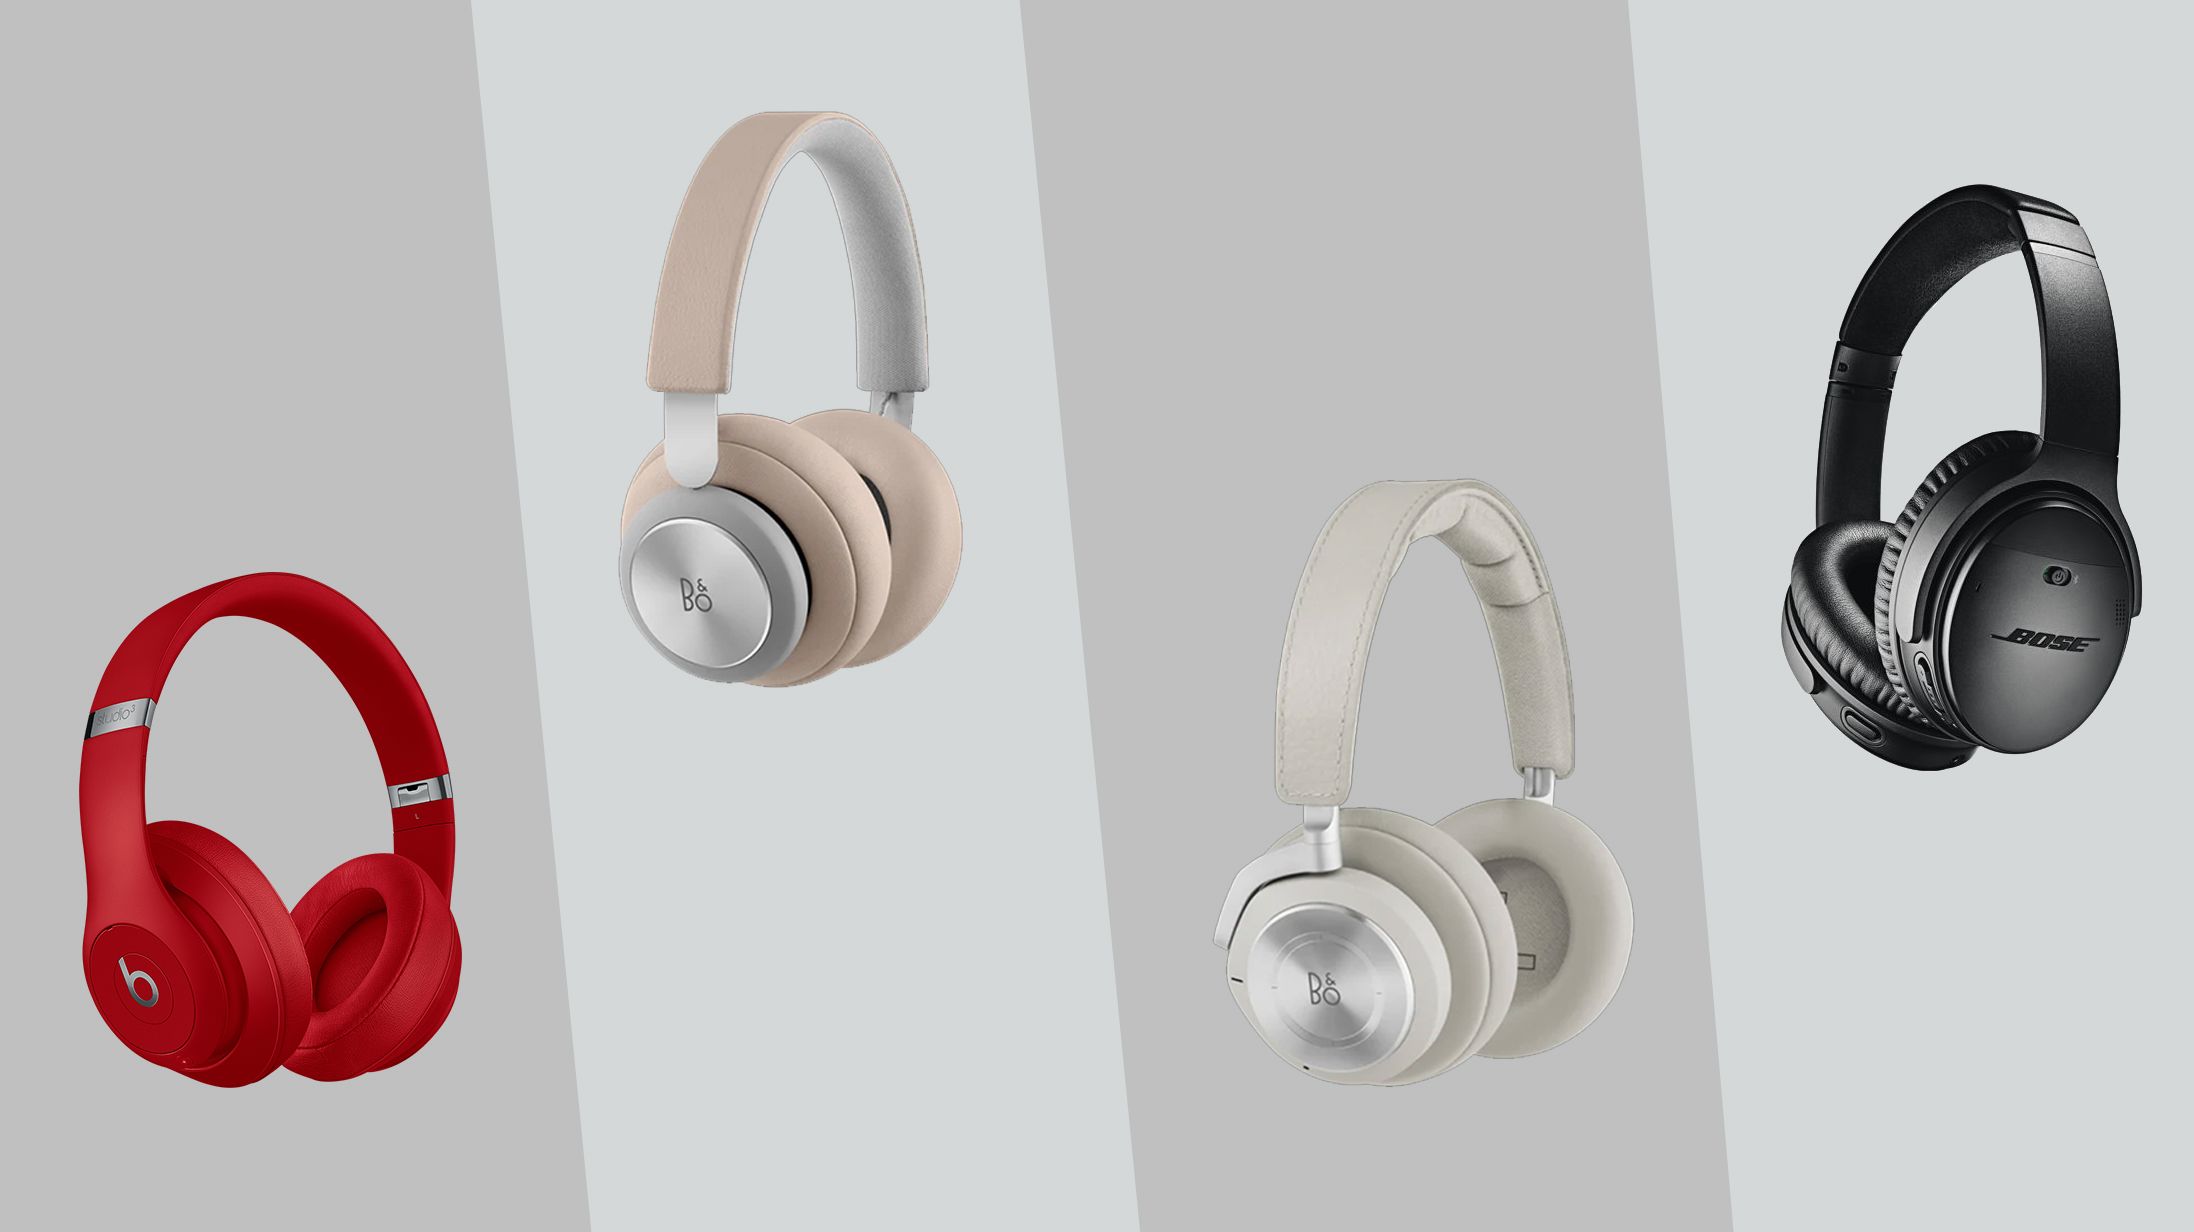 Wireless headphones vs true wireless earbuds: which design is best